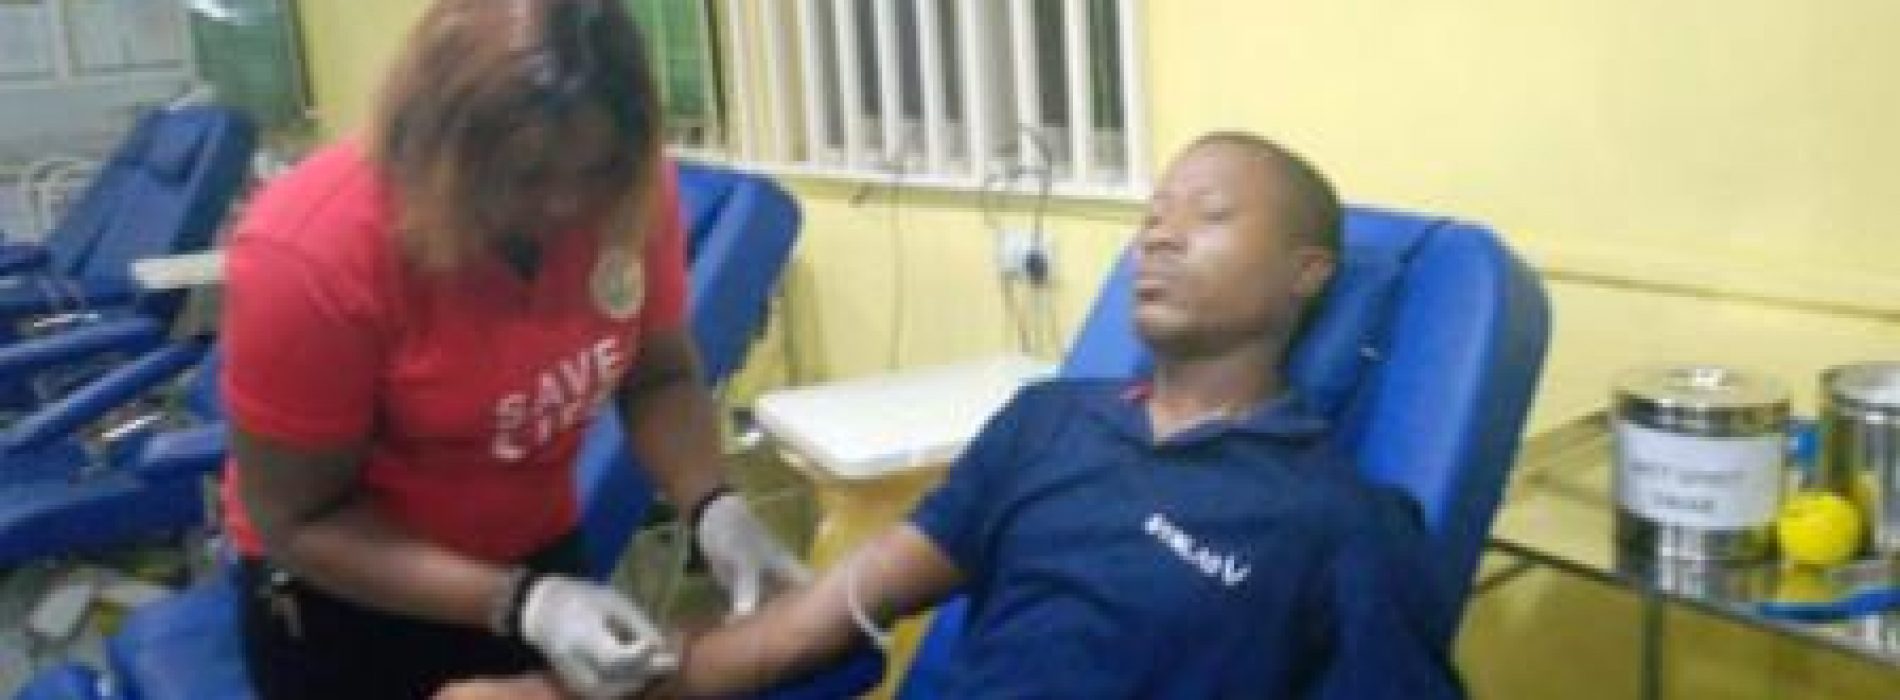 Make blood donation a habit- Haematologist urges Nigerians